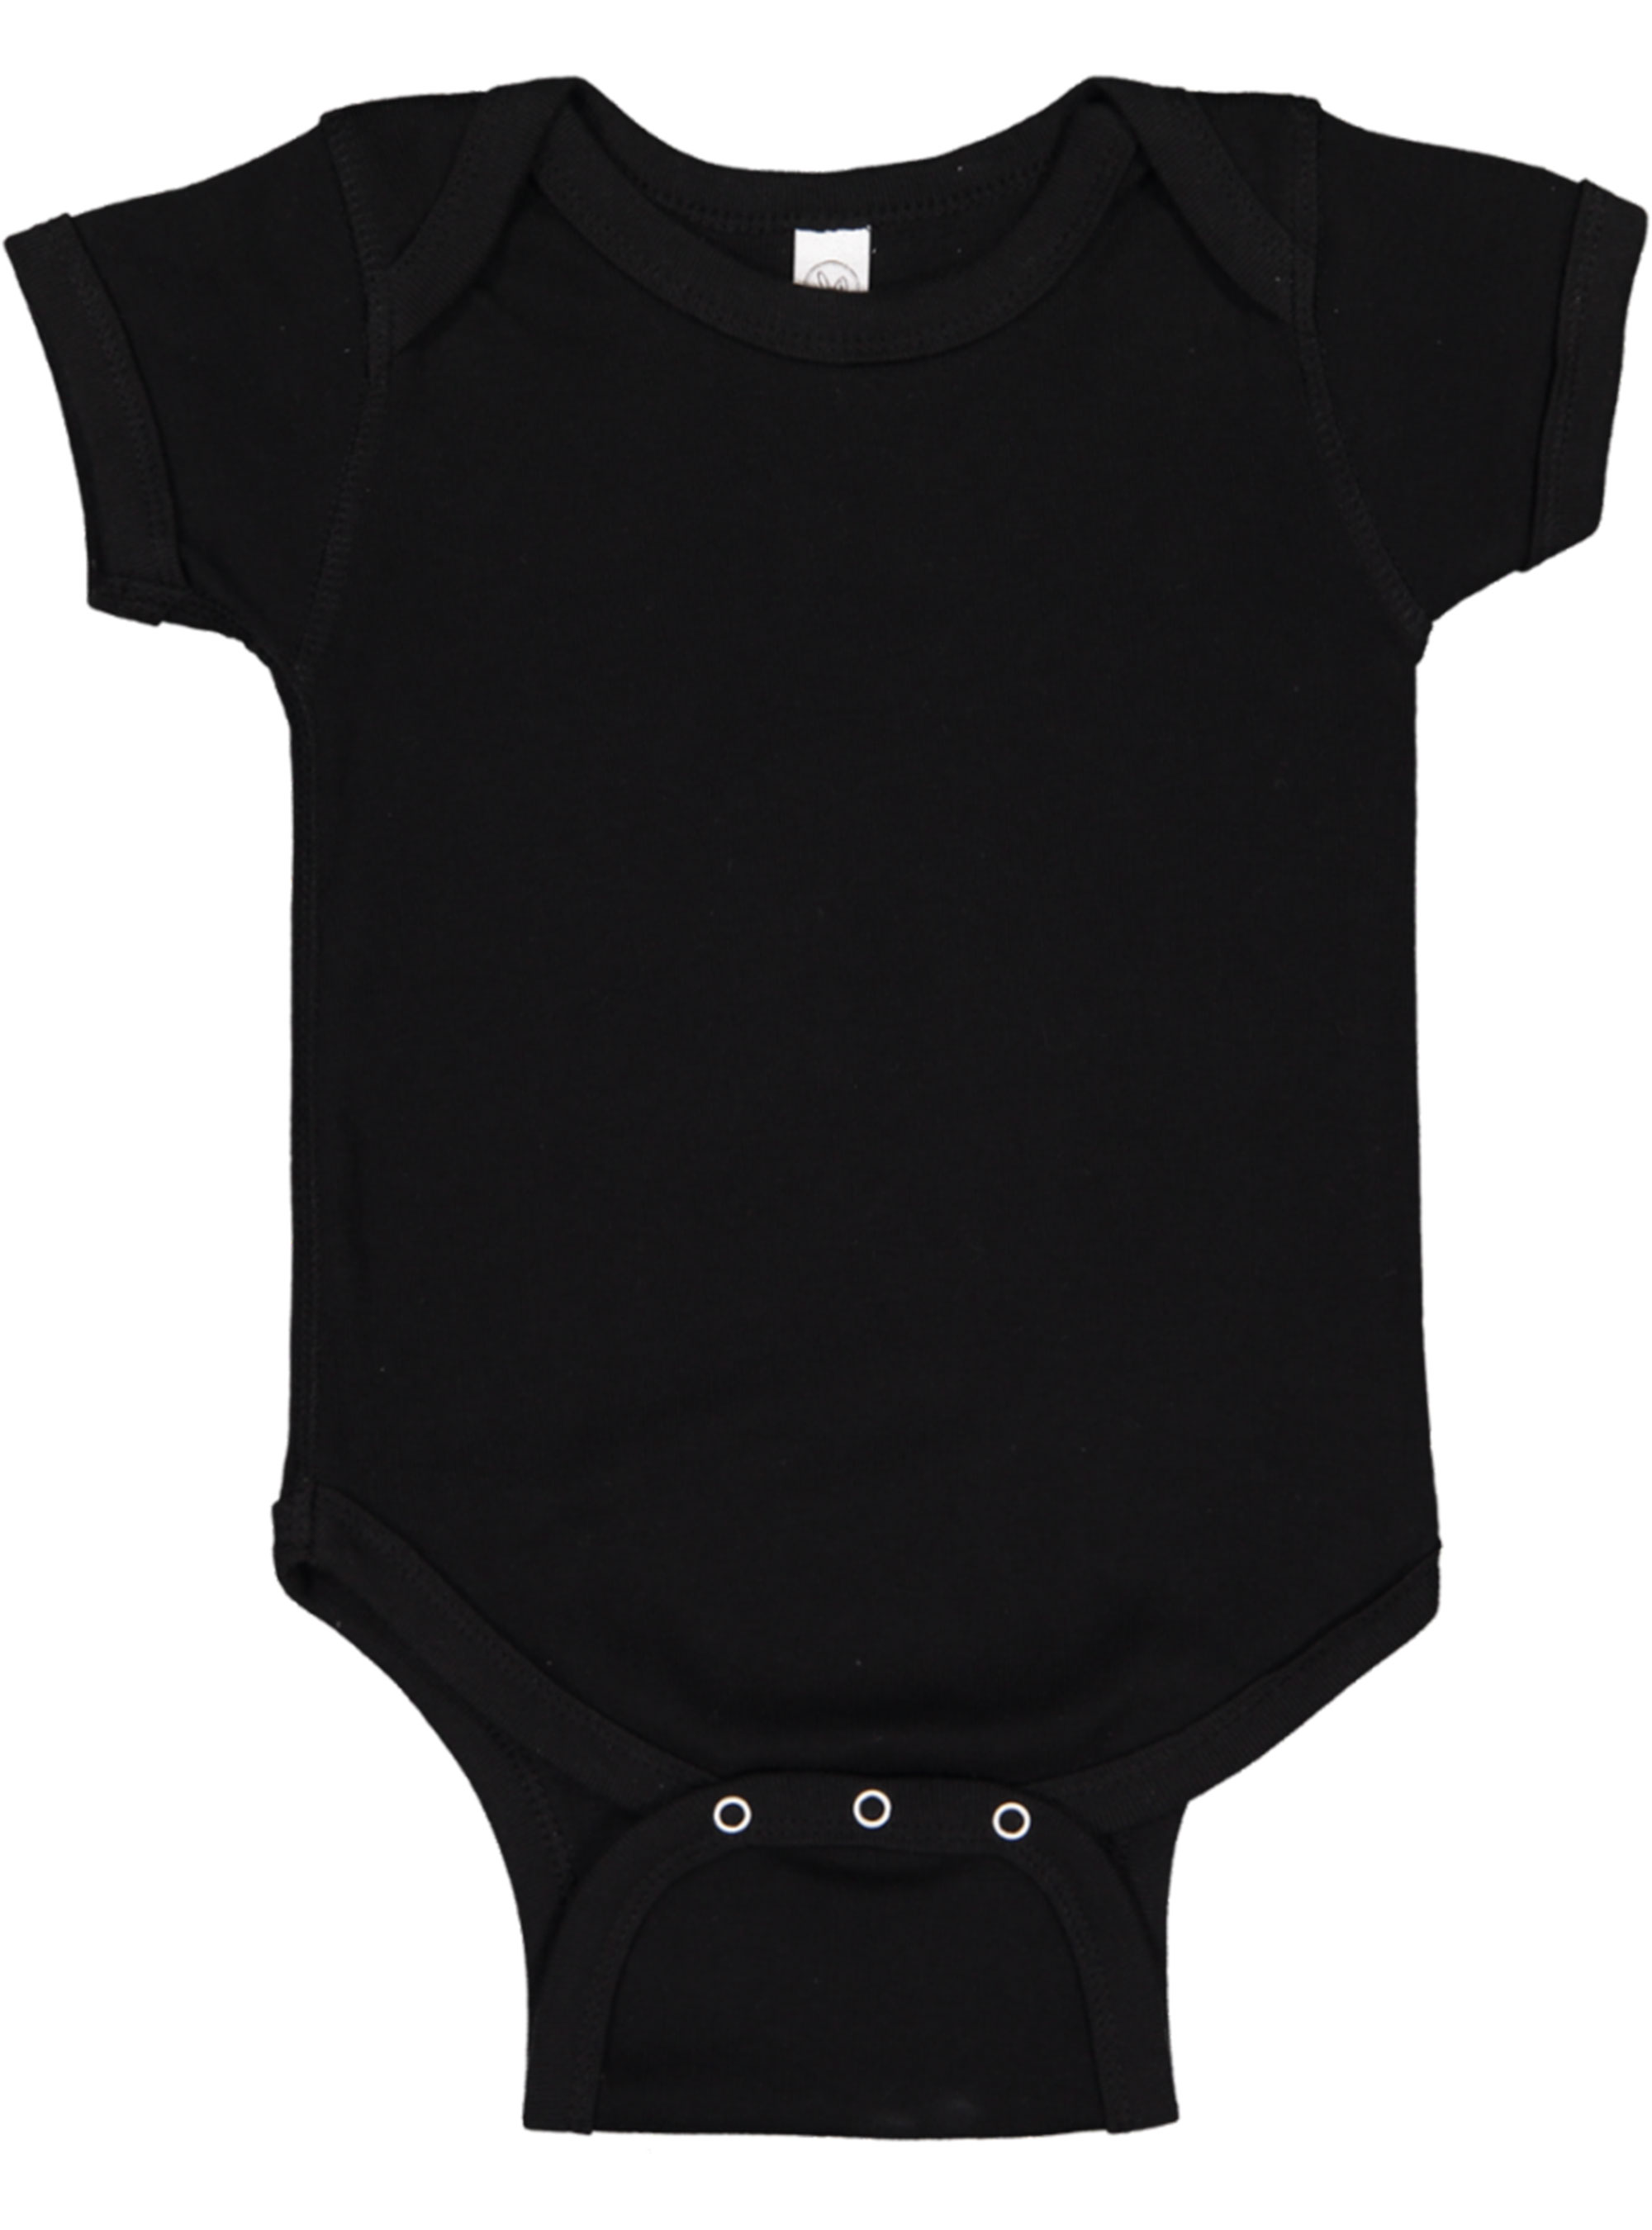 Rabbit Skins® 4424 Infant Fine Jersey Bodysuit